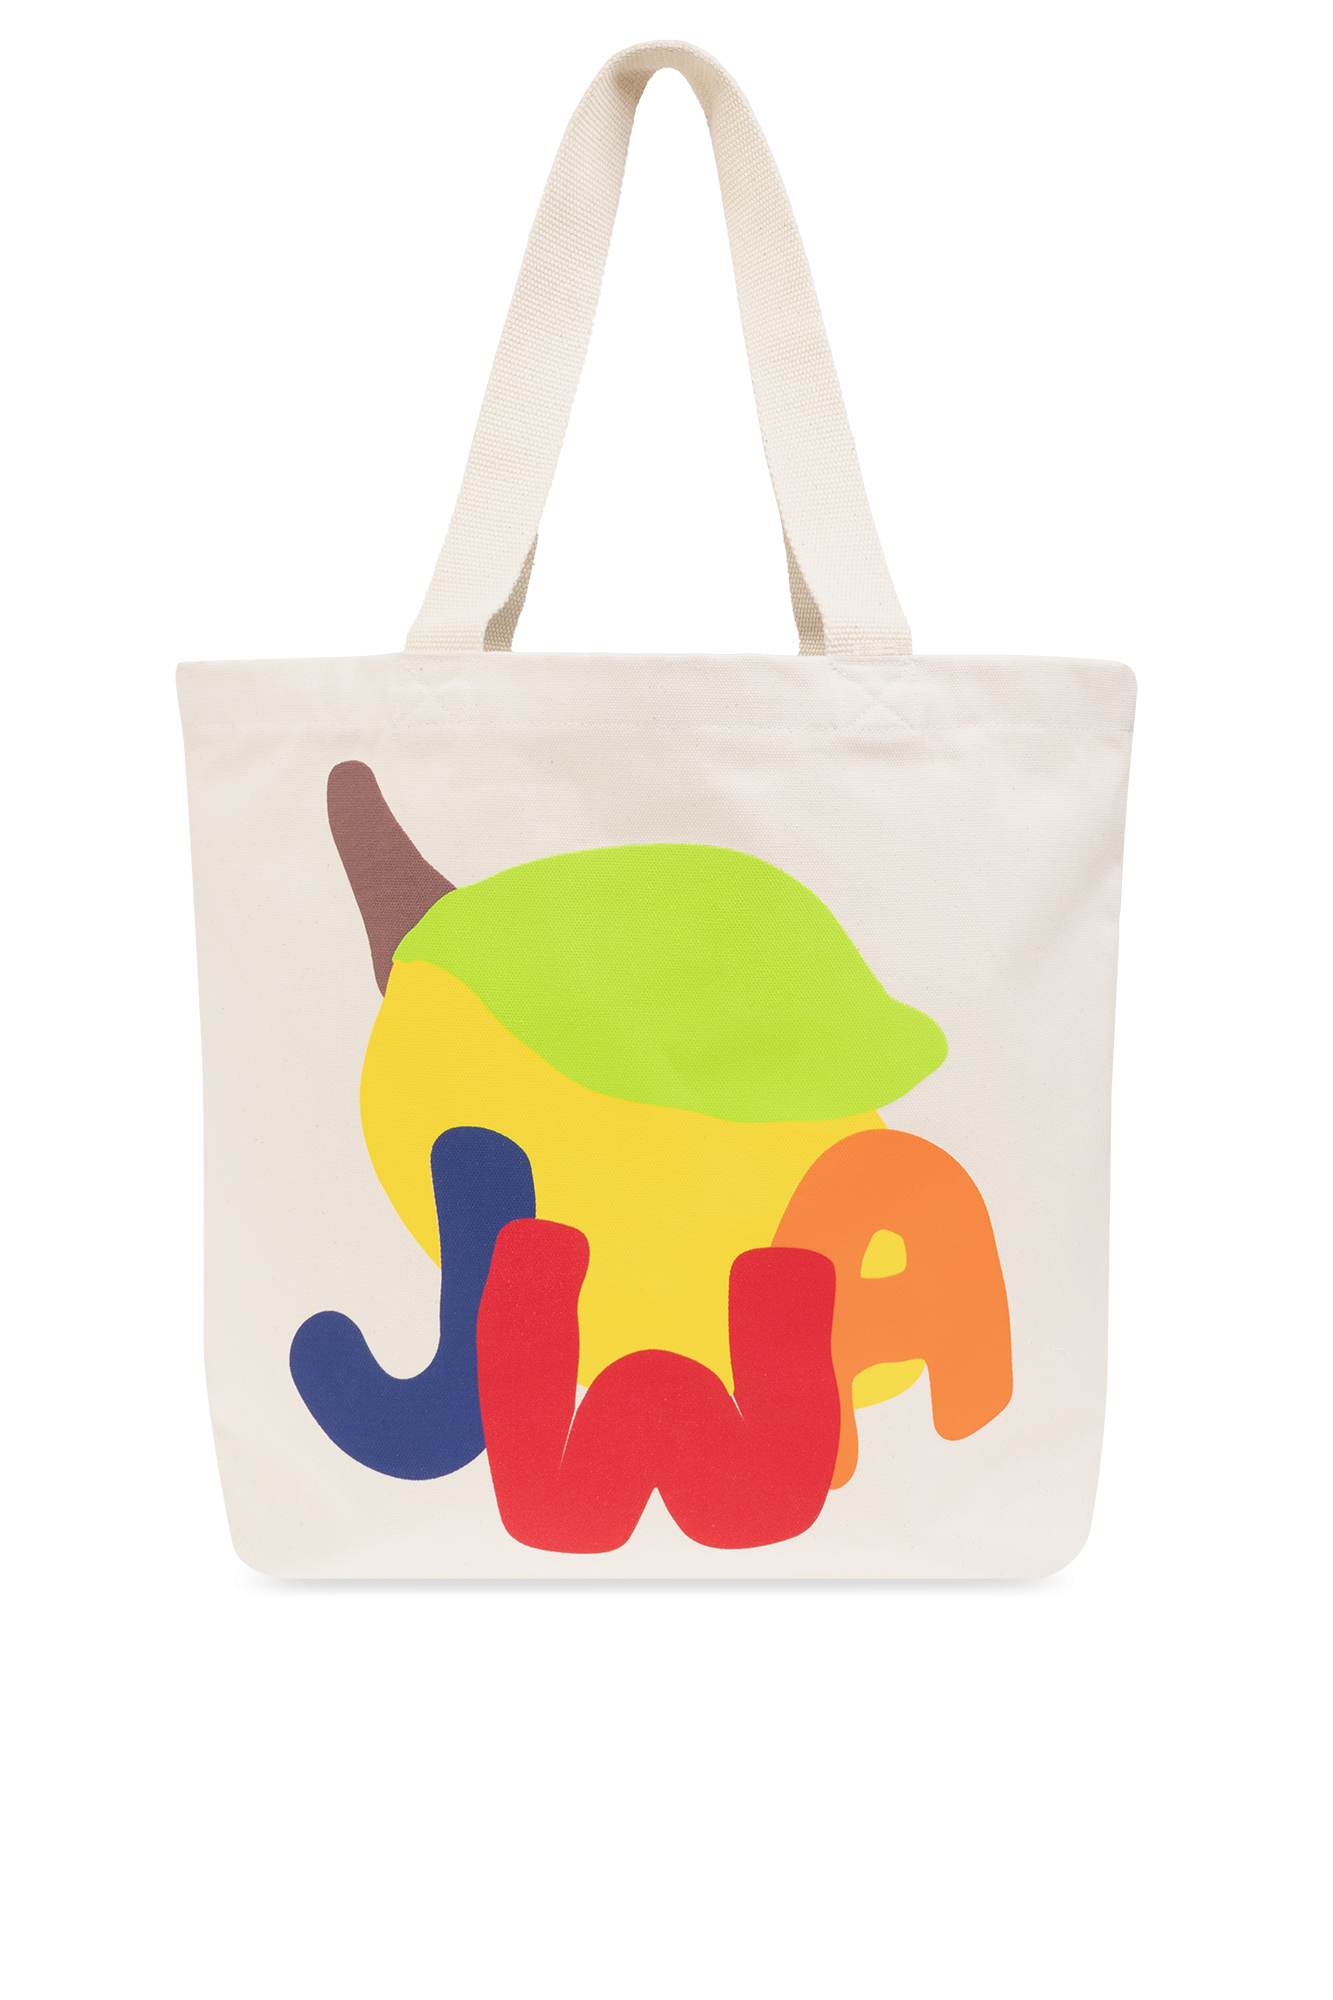 JW Anderson Shopper bag motif with logo